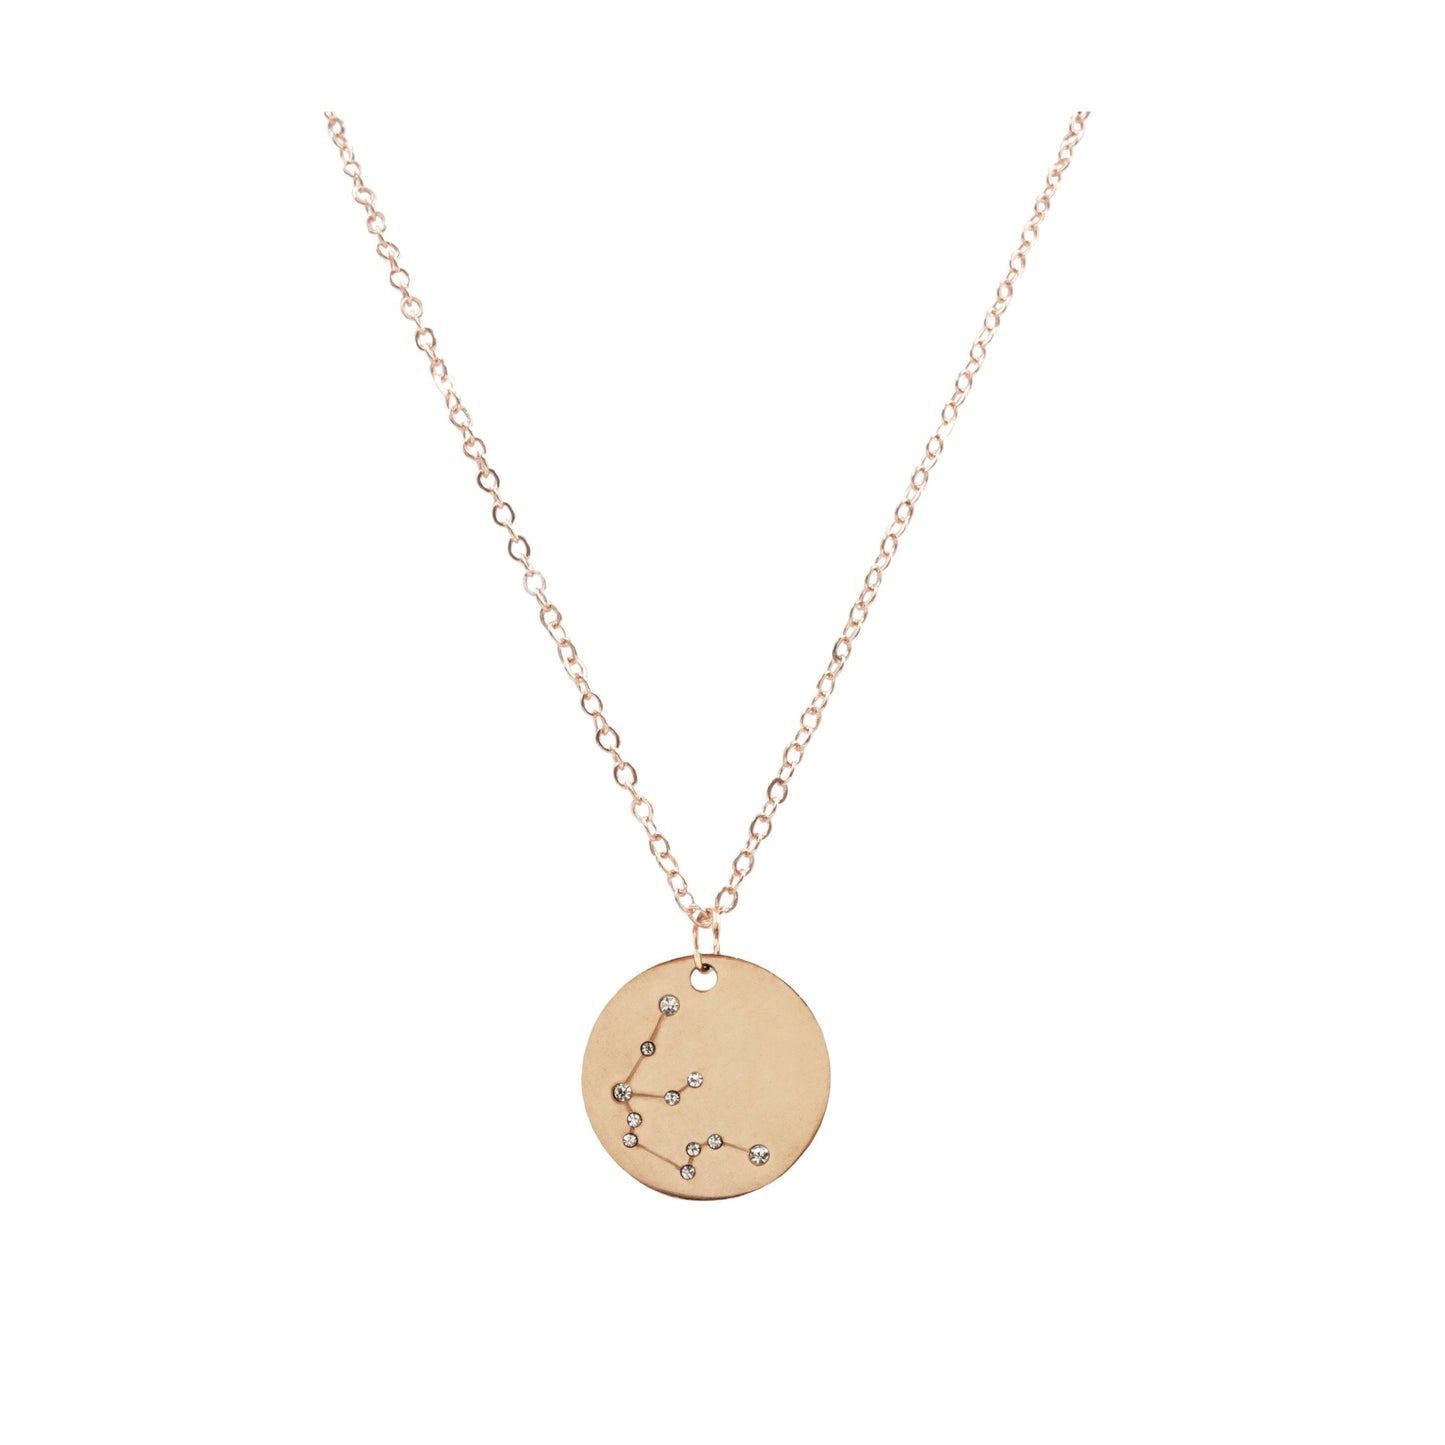 Zodiac Collection - Rose Gold Aquarius Necklace (Jan 20 - Feb 18)